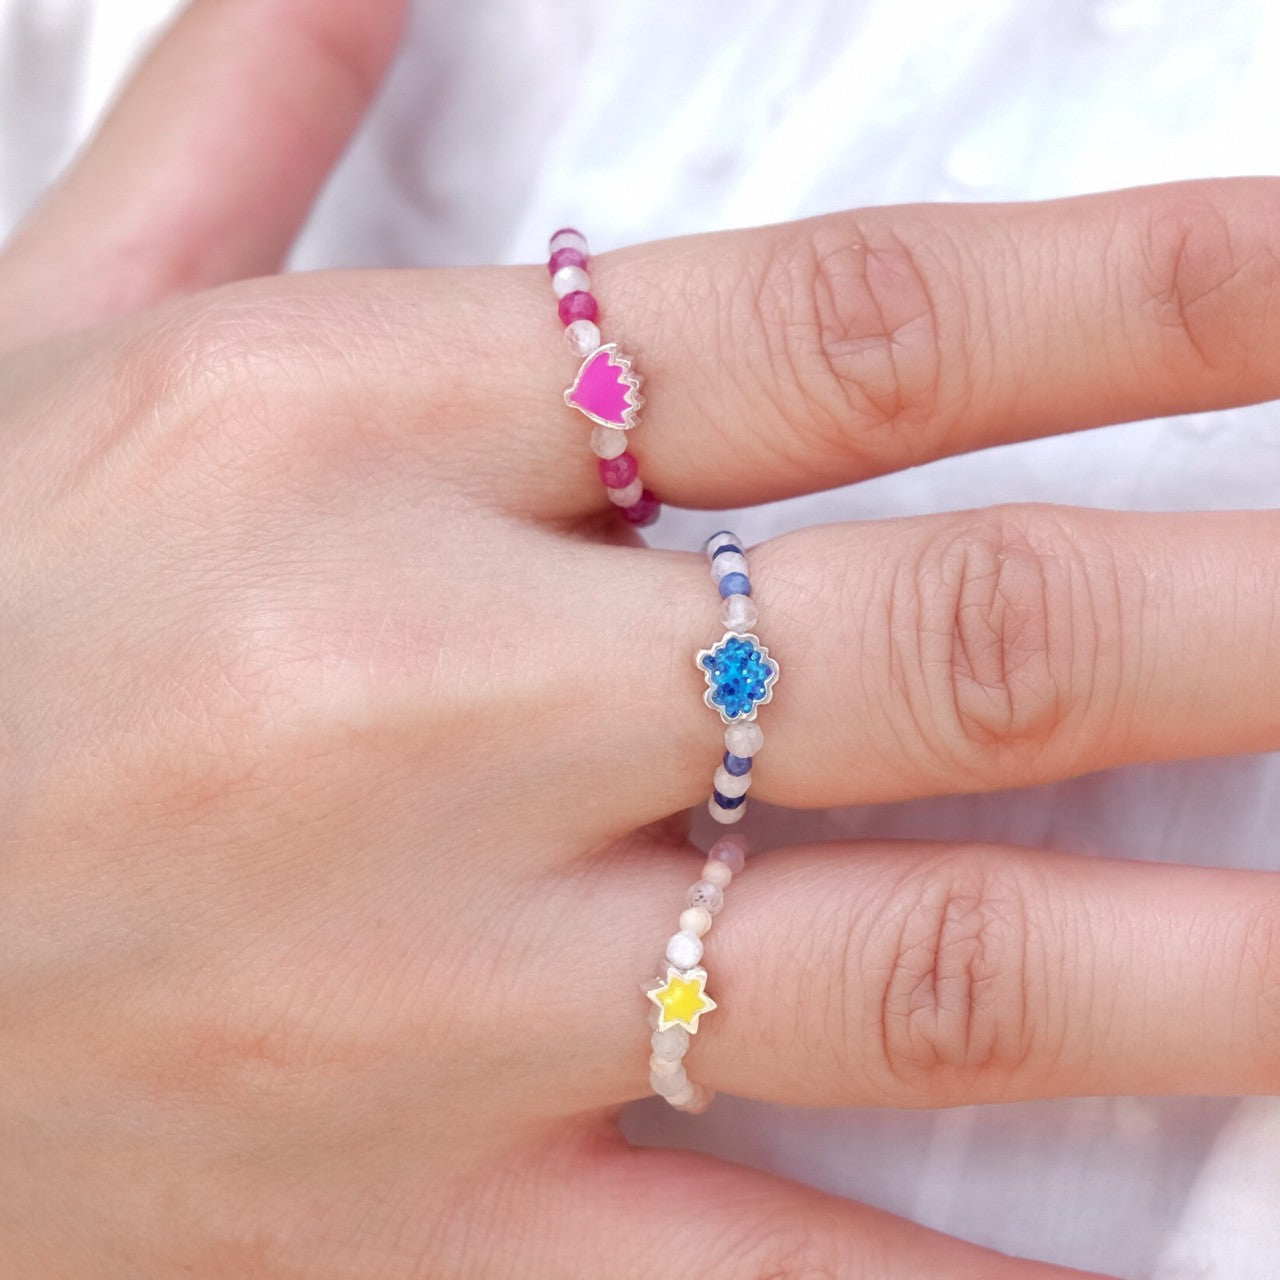 Moomin Flower Genuine Stones Ring